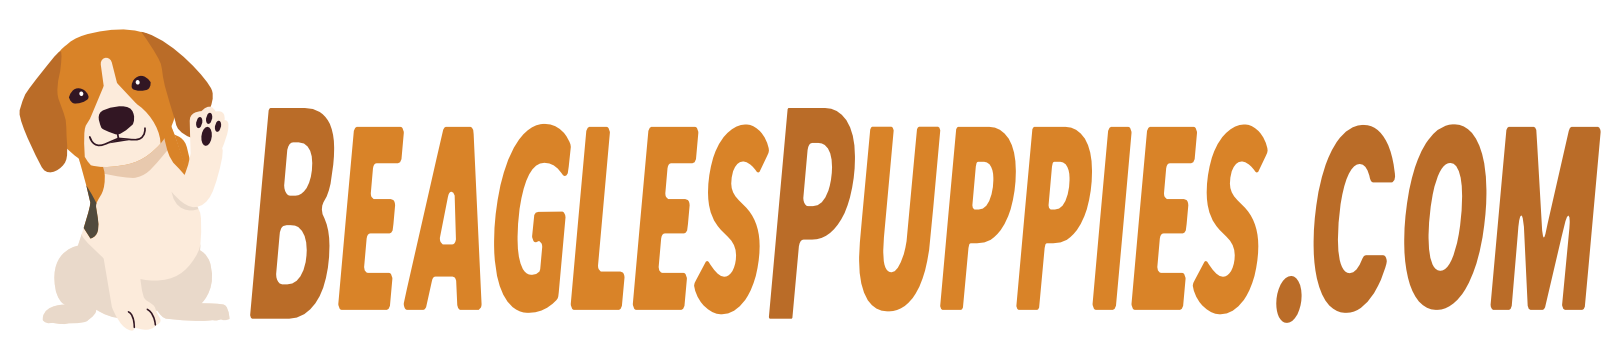 beagles puppies logo